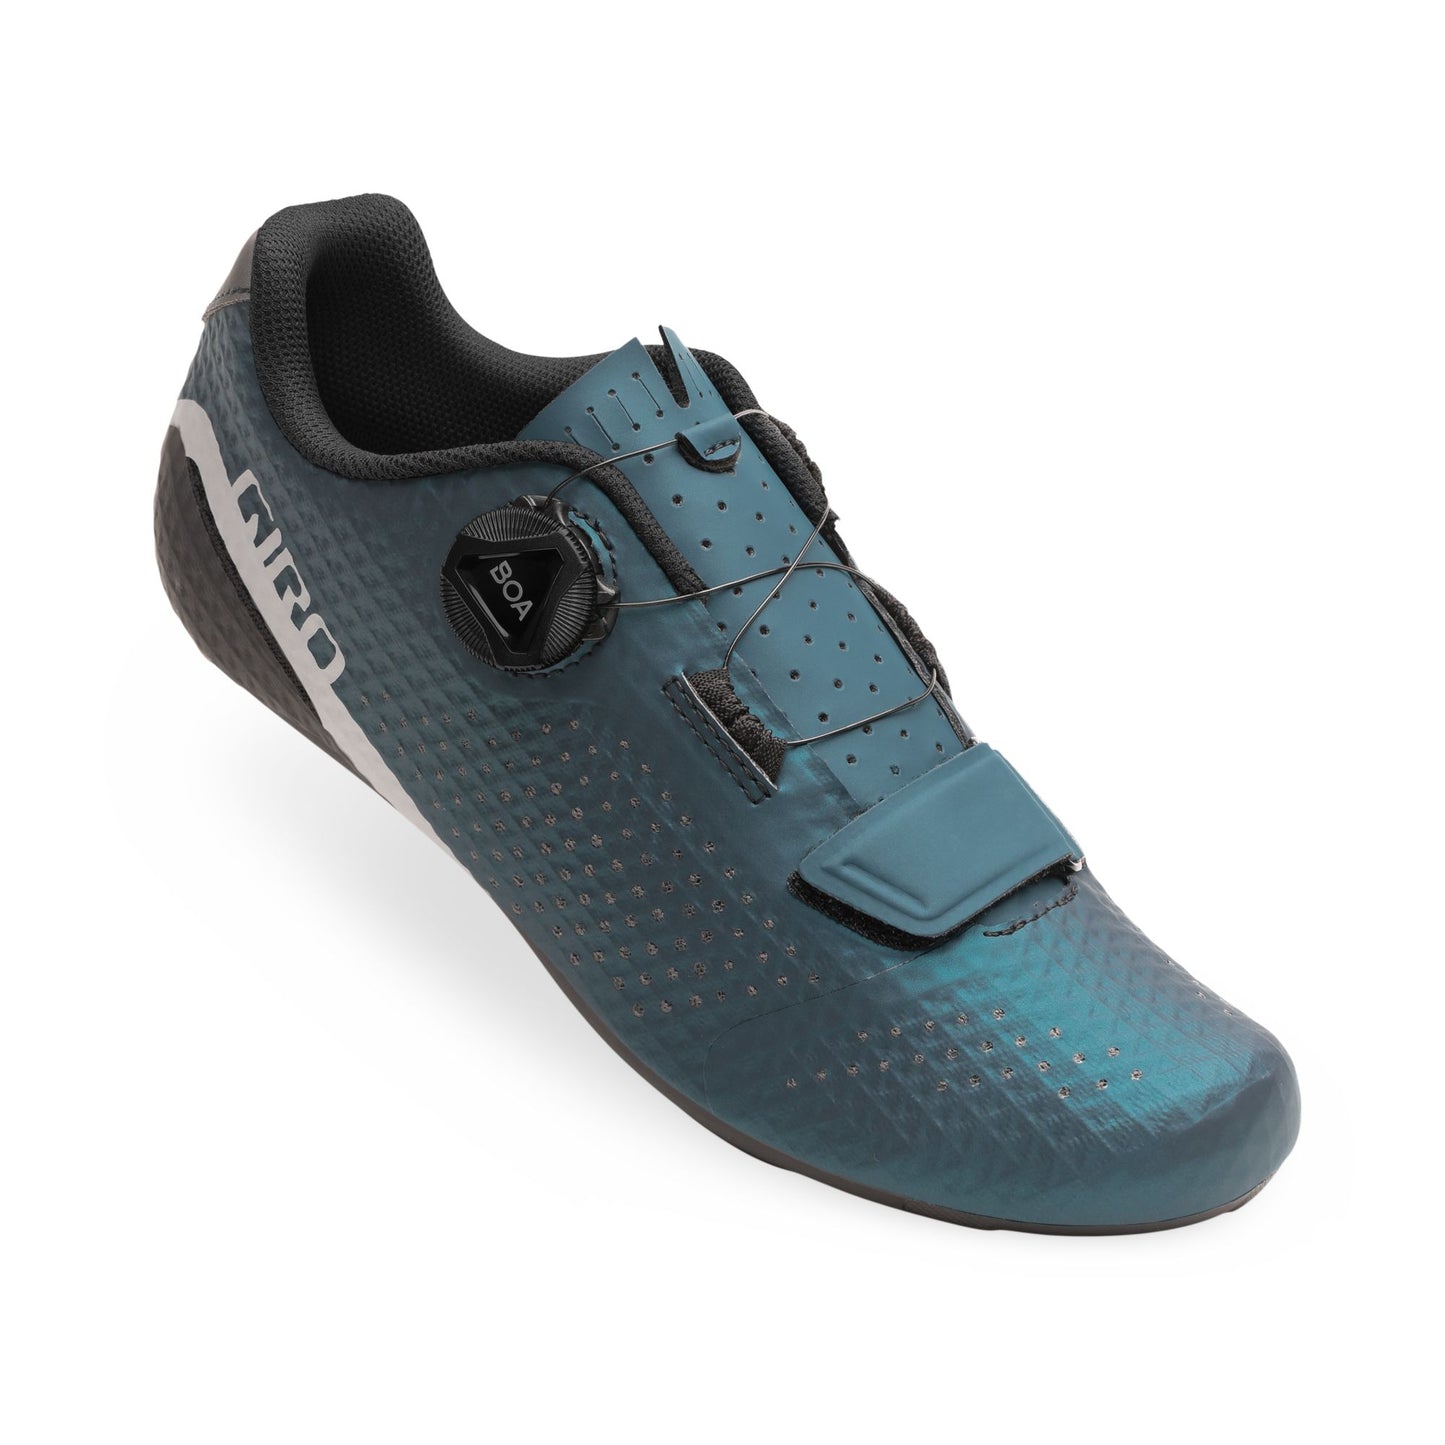 Giro Cadet Shoe Harbor Blue Anodized Bike Shoes